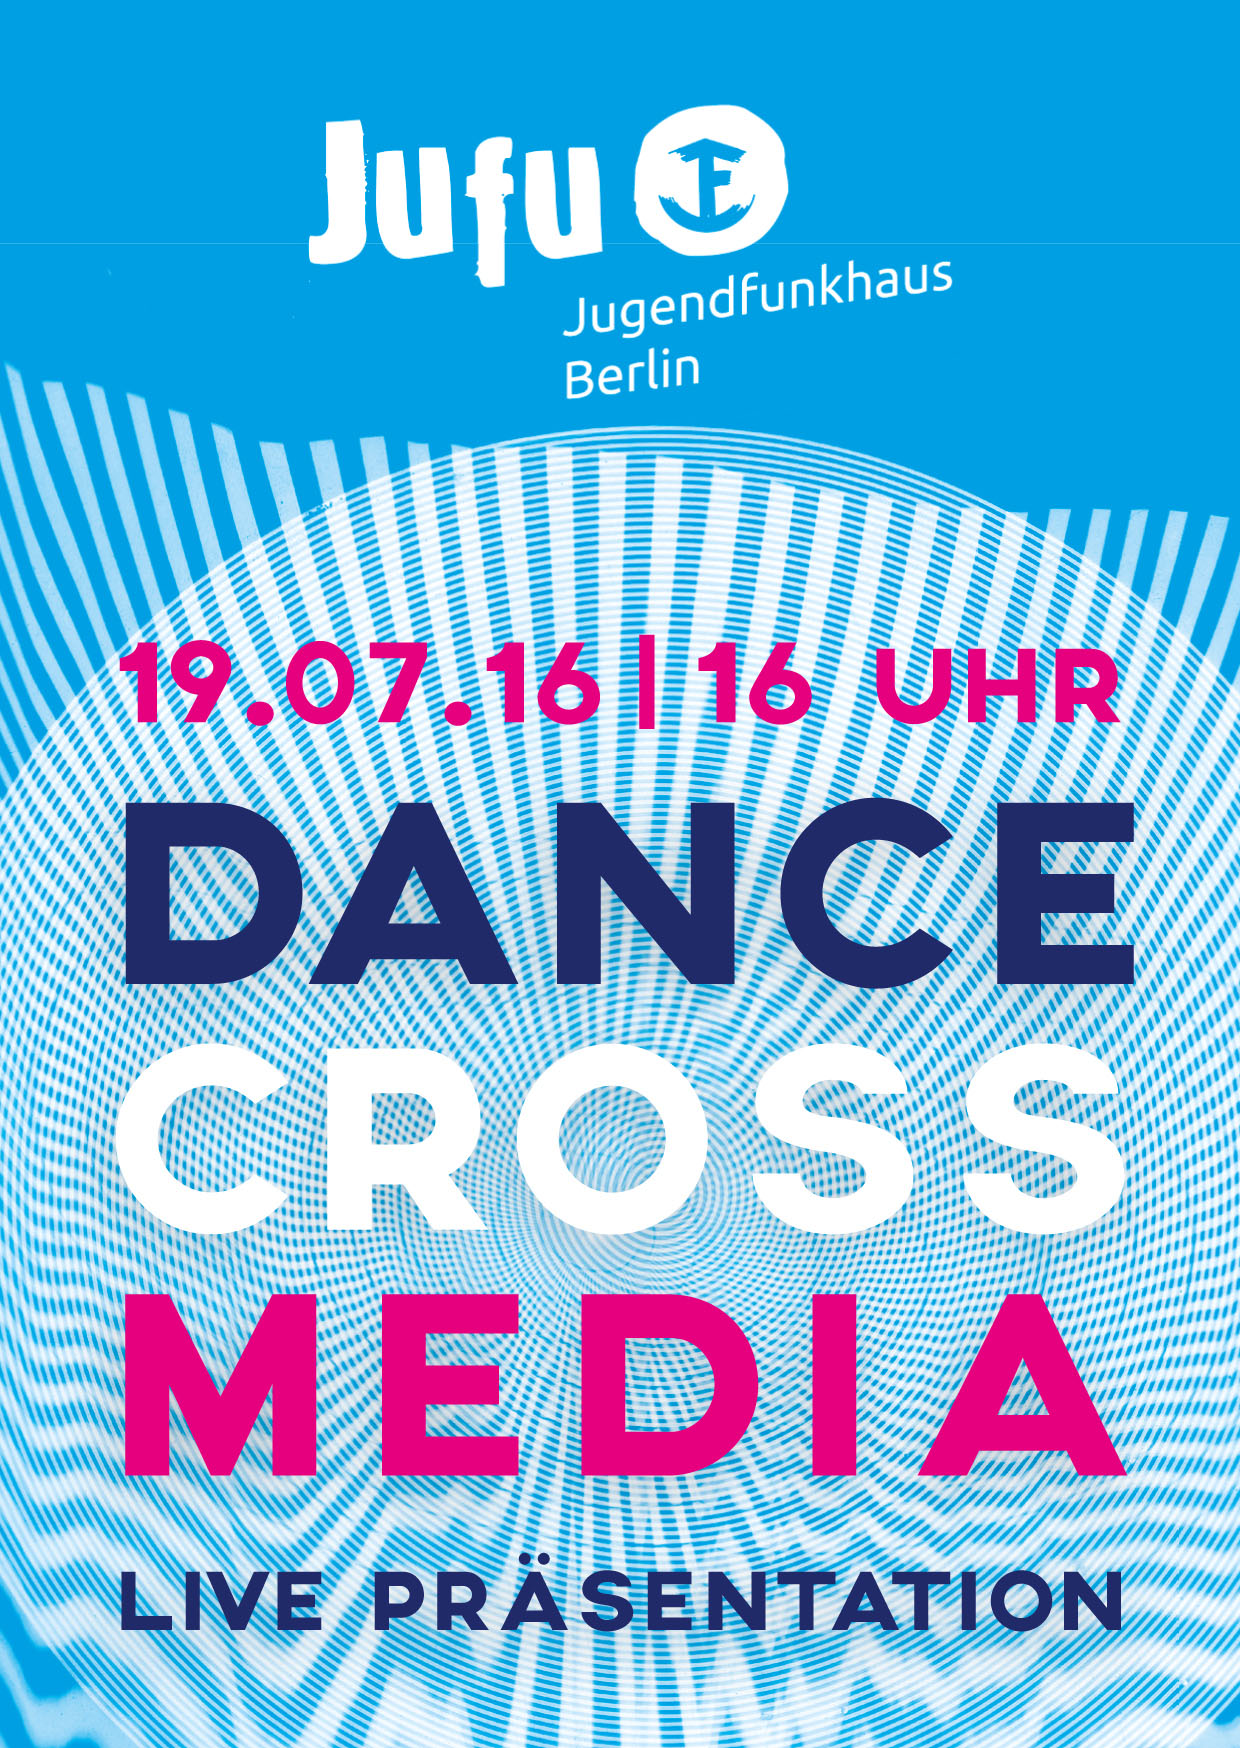 jufu-dance-cross-media-h